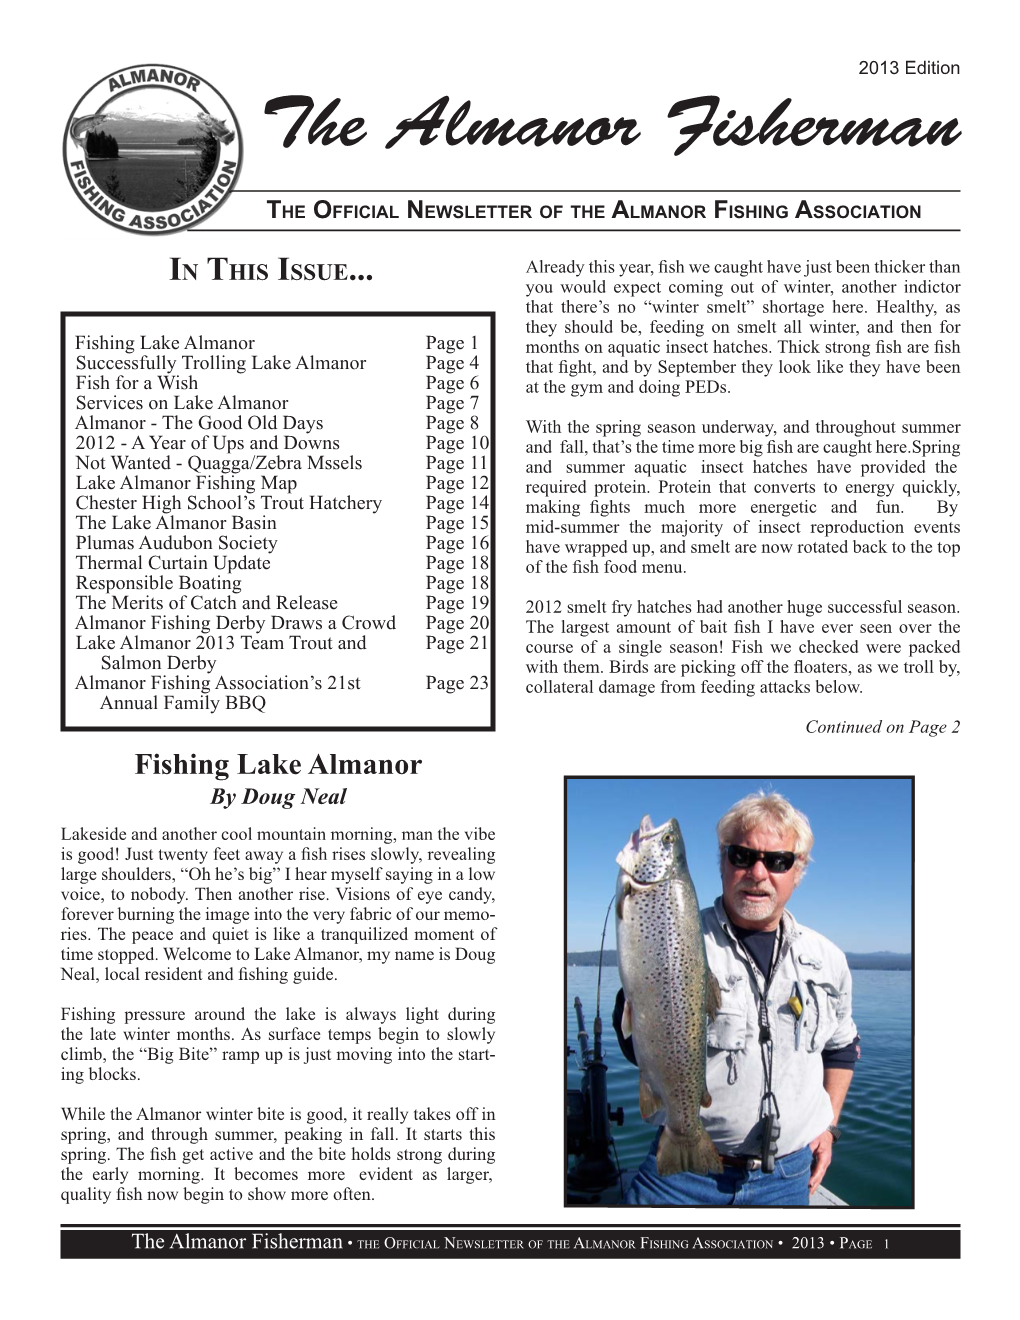 2013 Edition the Almanor Fisherman